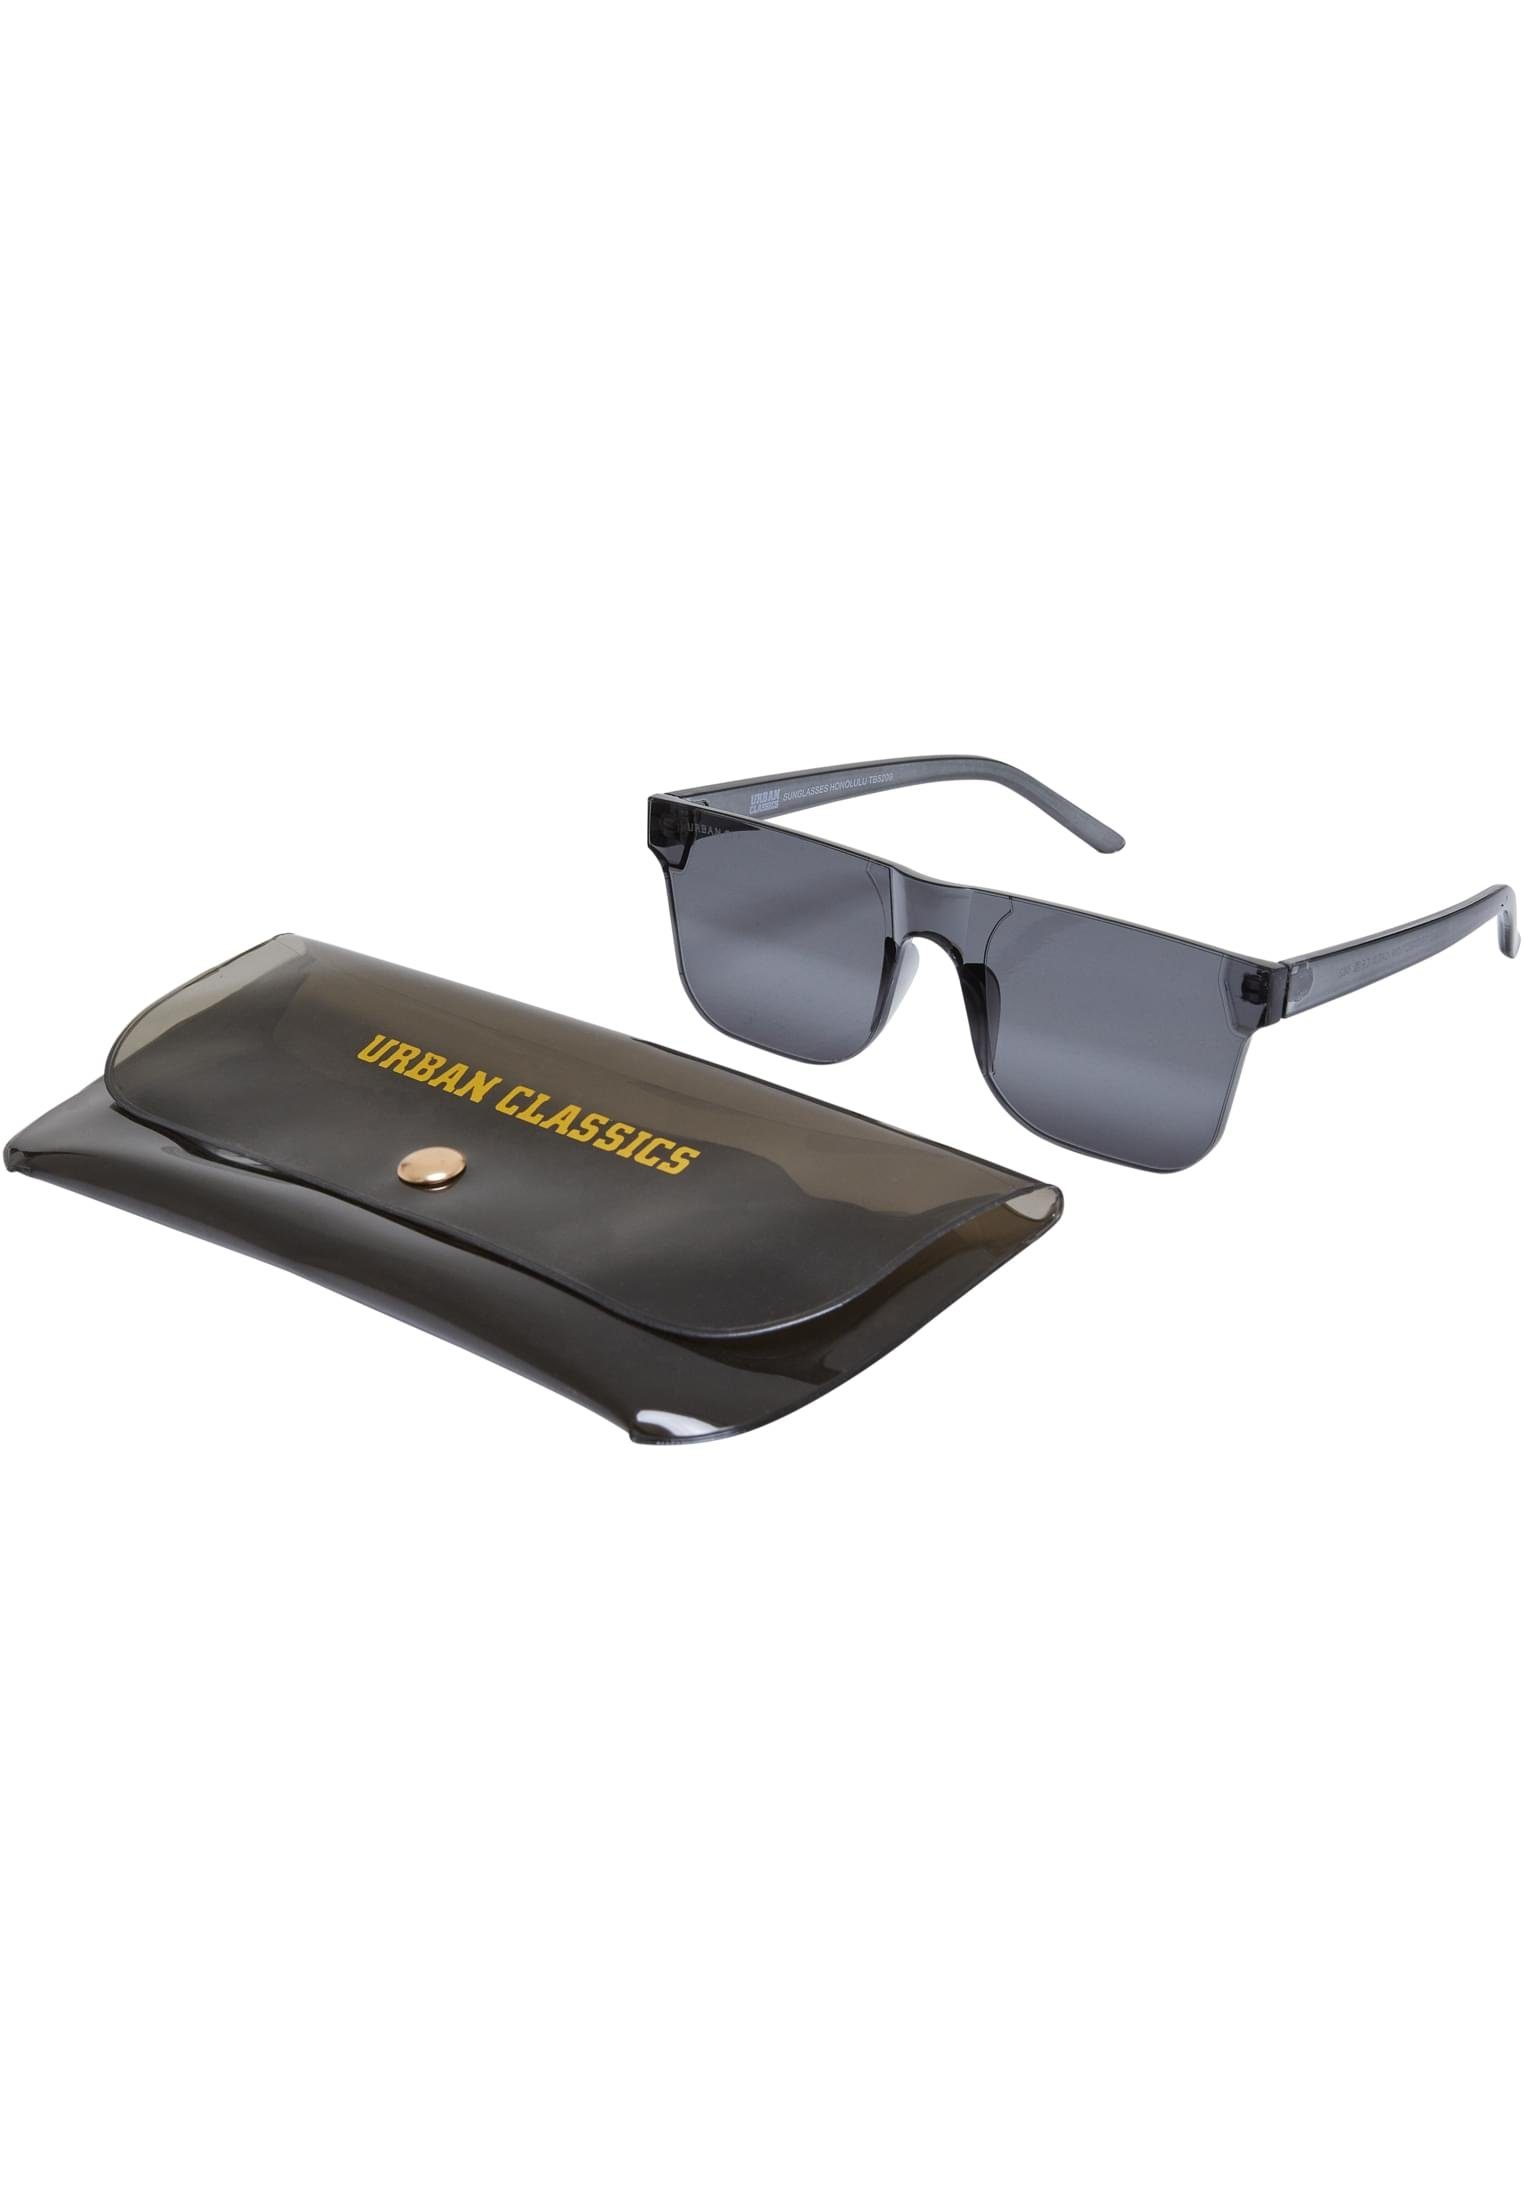 URBAN CLASSICS Sonnenbrille Unisex Sunglasses Honolulu With Case black | Sonnenbrillen